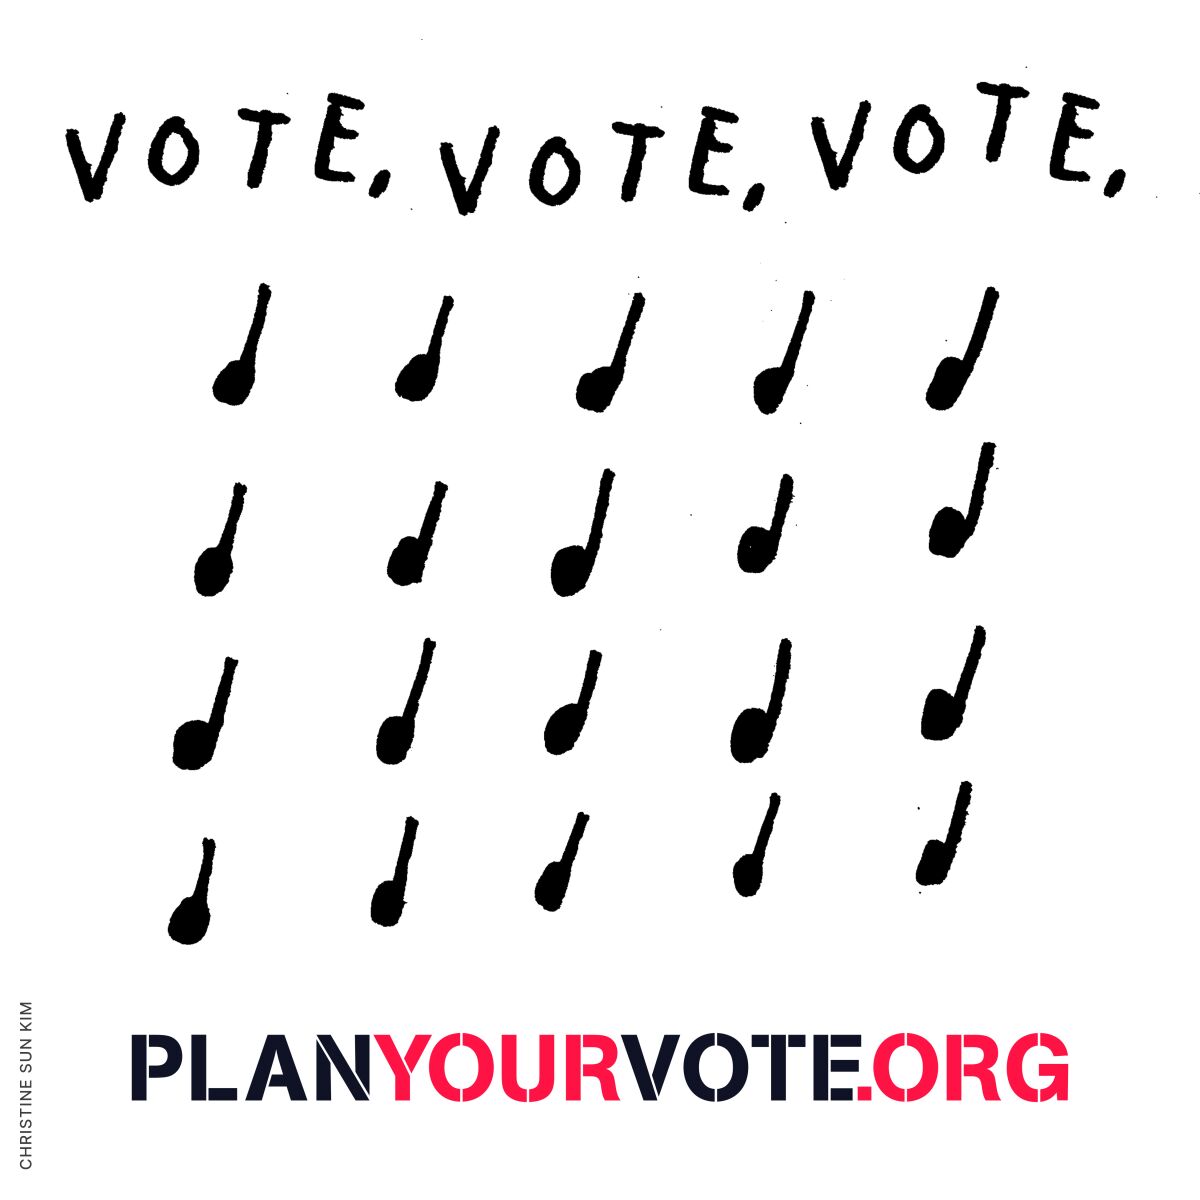 Artist Christine Sun Kim's voting advocacy image for Plan Your Vote.